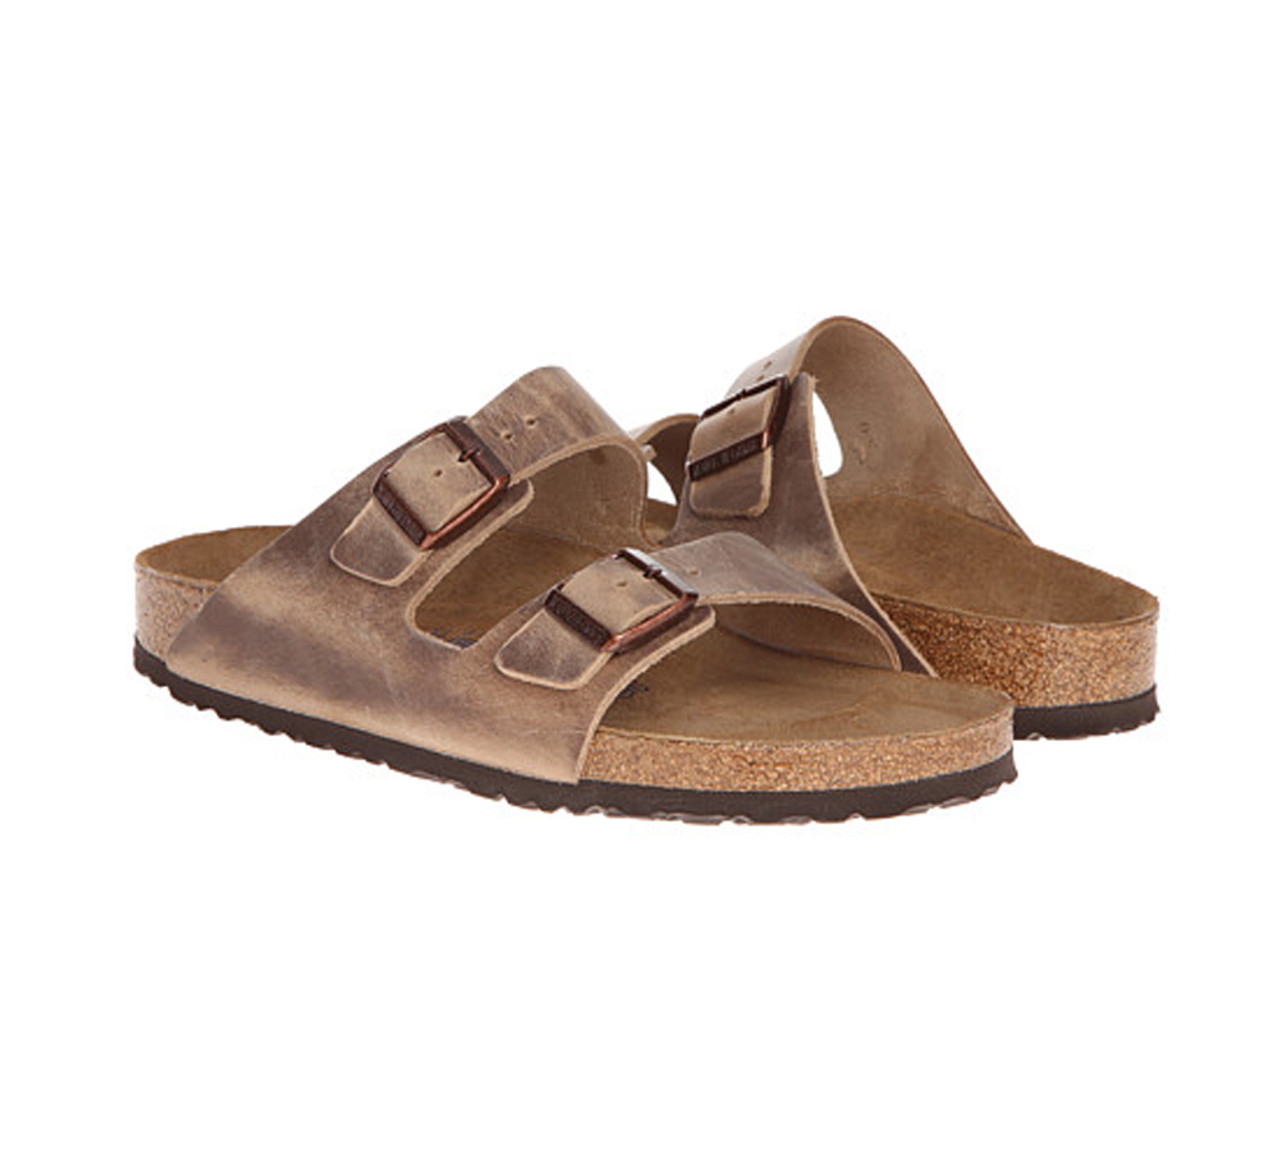 Birkenstock Arizona - Oiled Leather (Unisex) Sandals Tobacco Oiled Leather : EU 42 (US Men's 9-9.5 - Women's 11-11.5) Regular